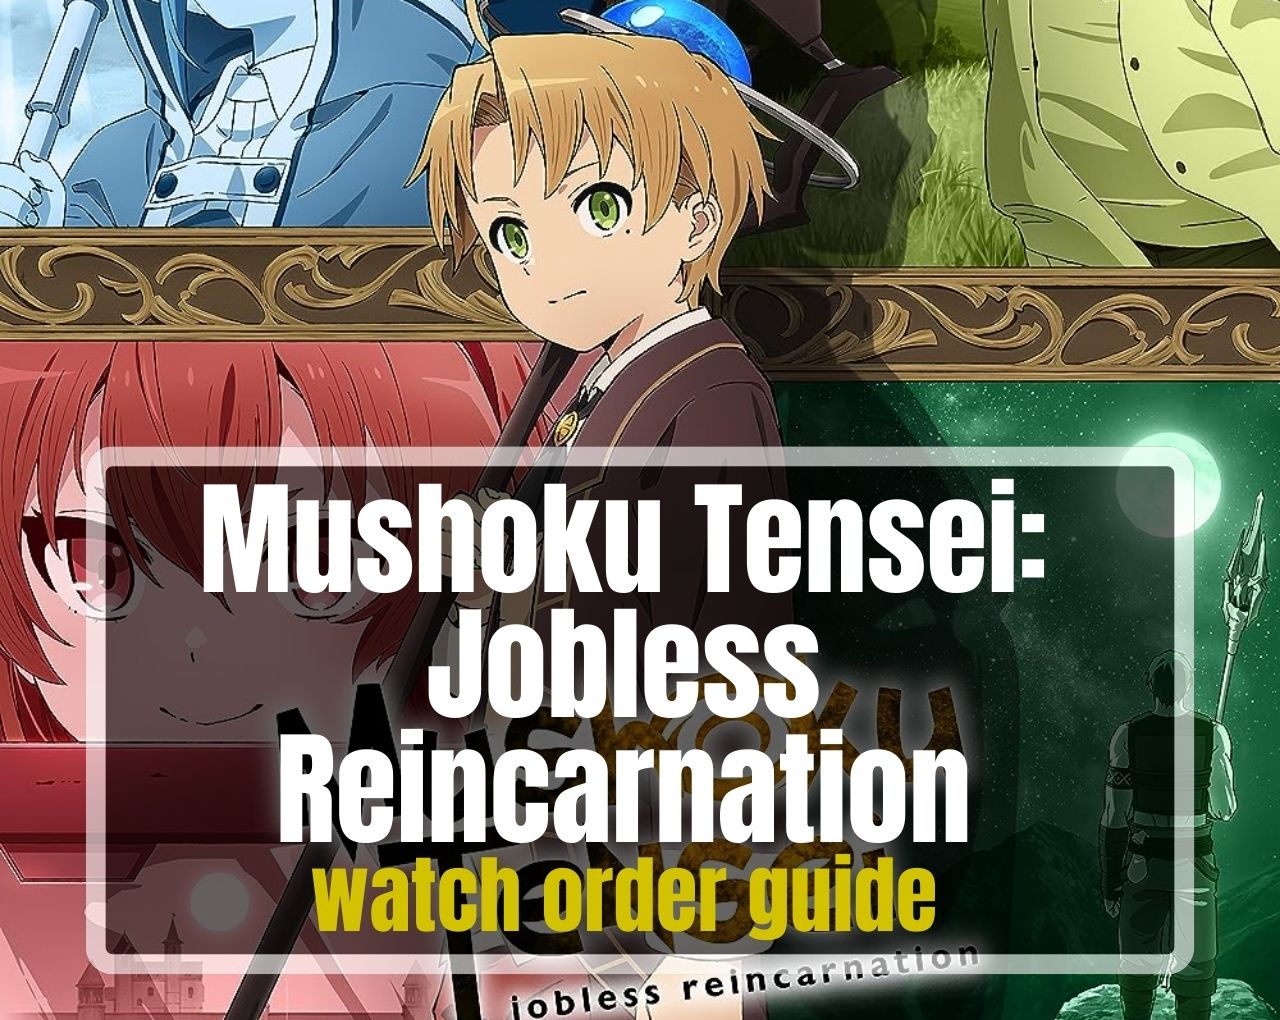 Mushoku Tensei-Jobless Reincarnation watch order guide